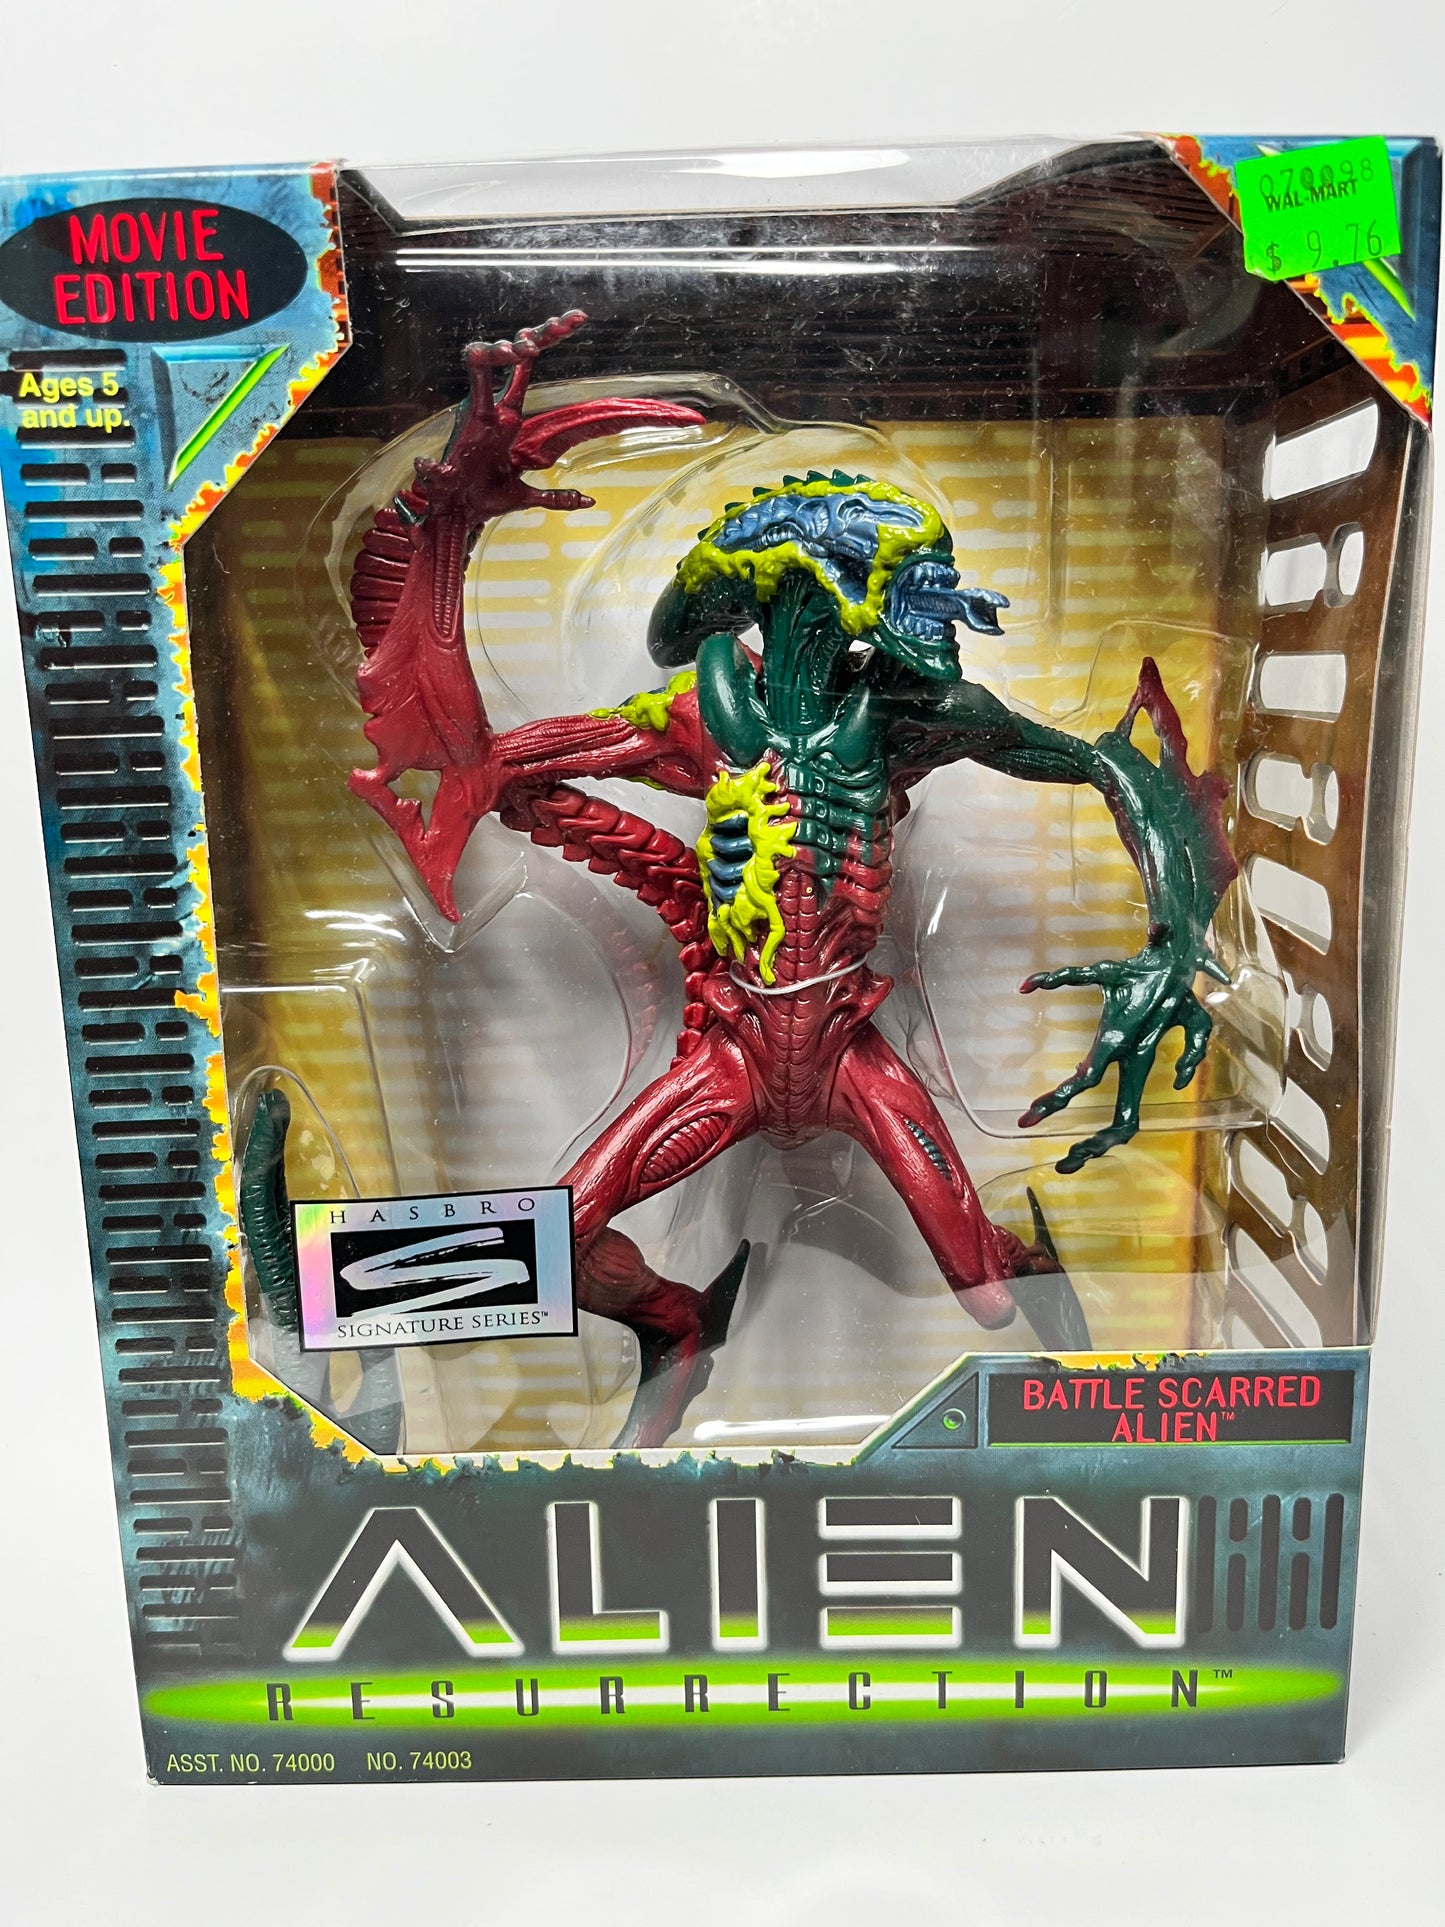 Hasbro Resurrection Movie Edition Battle Scarred Alien Action Figure